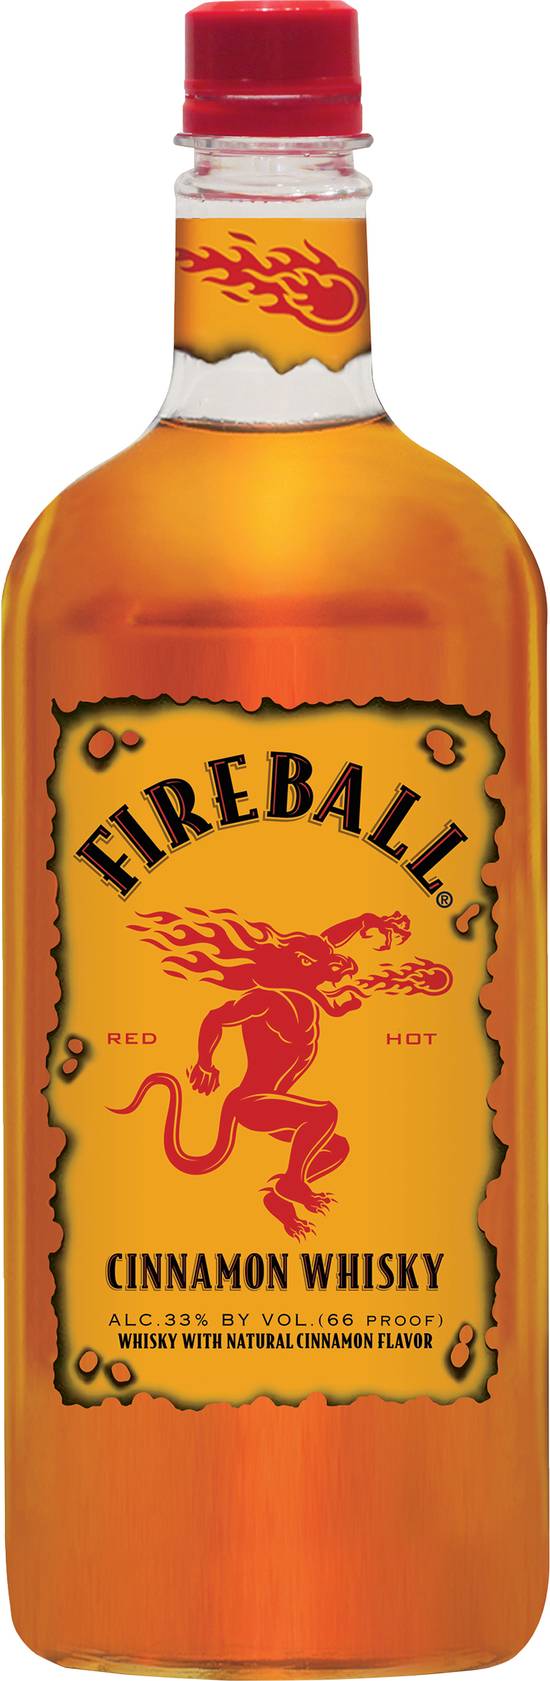 Fireball Cinnamon Whisky (750 ml)